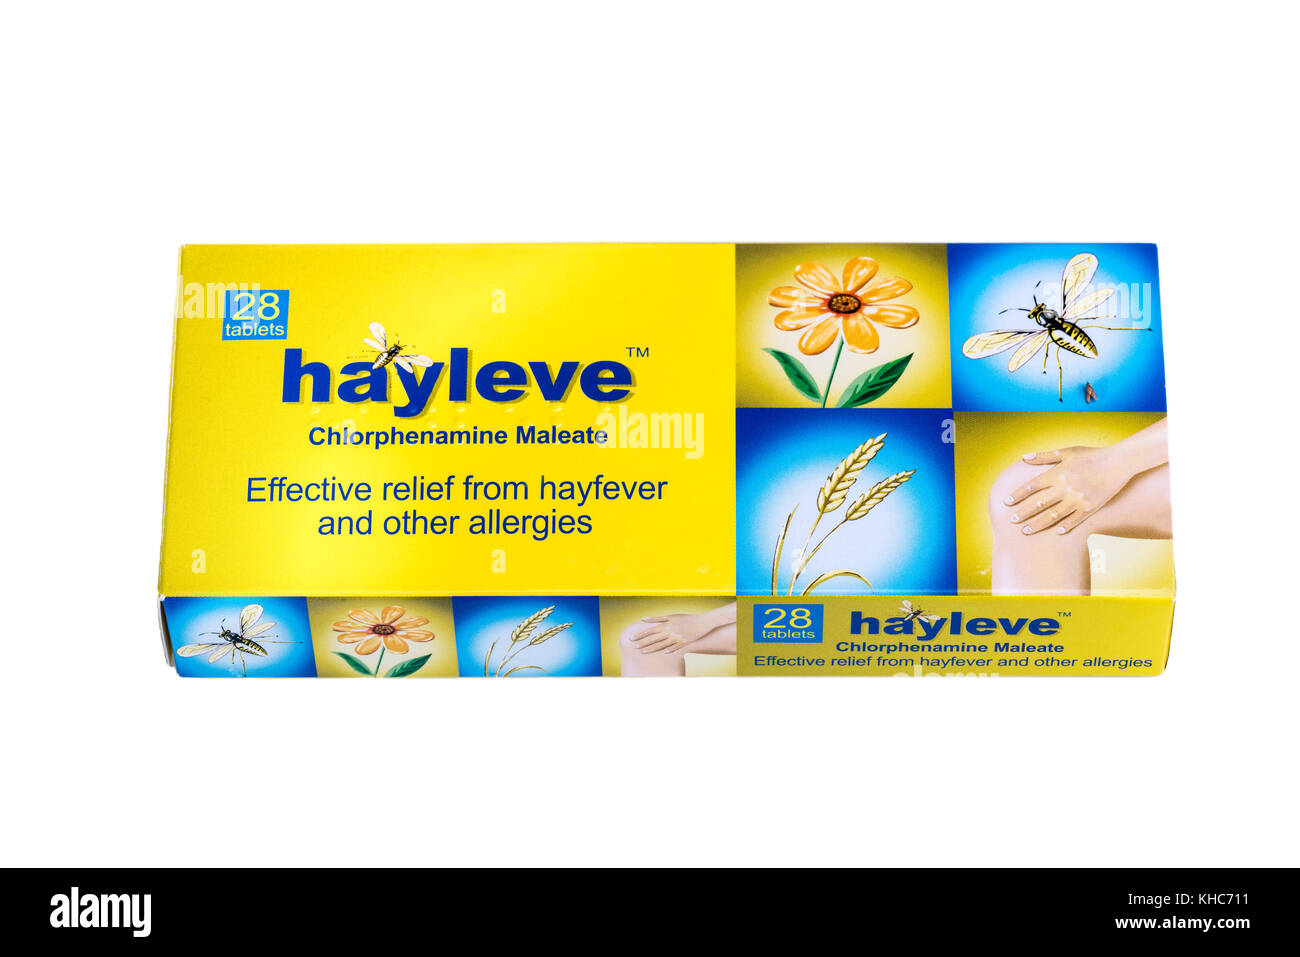 Hayleve antistaminico, chlorphenamine maleato, compresse. Foto Stock